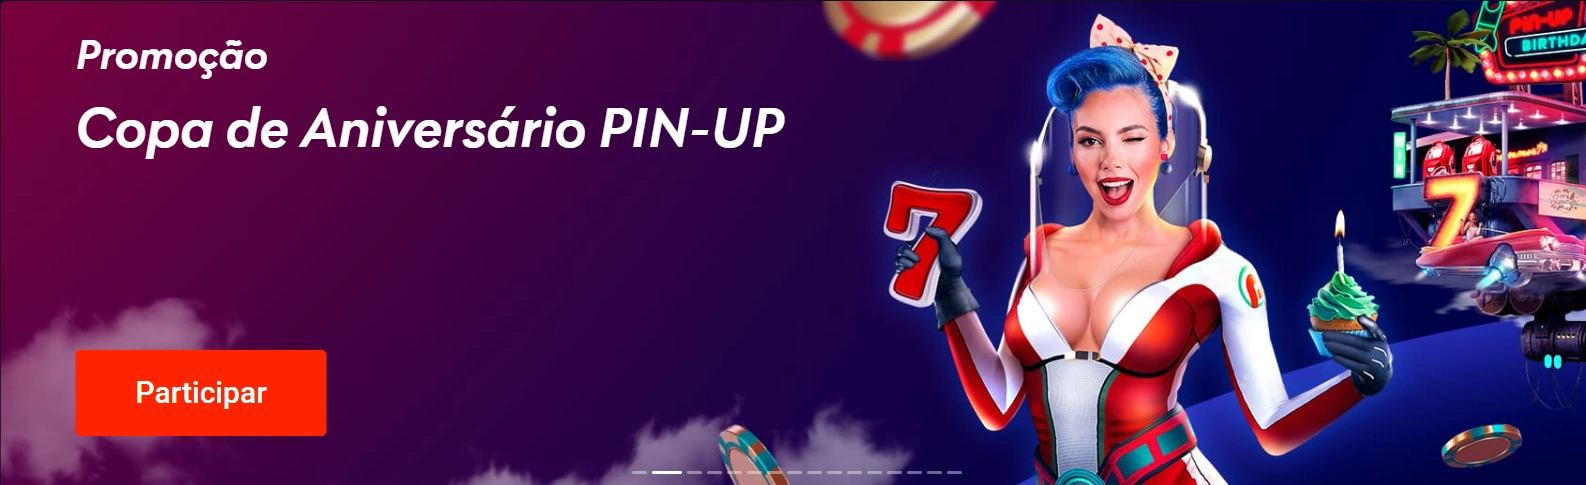 Pin Up Casino Games